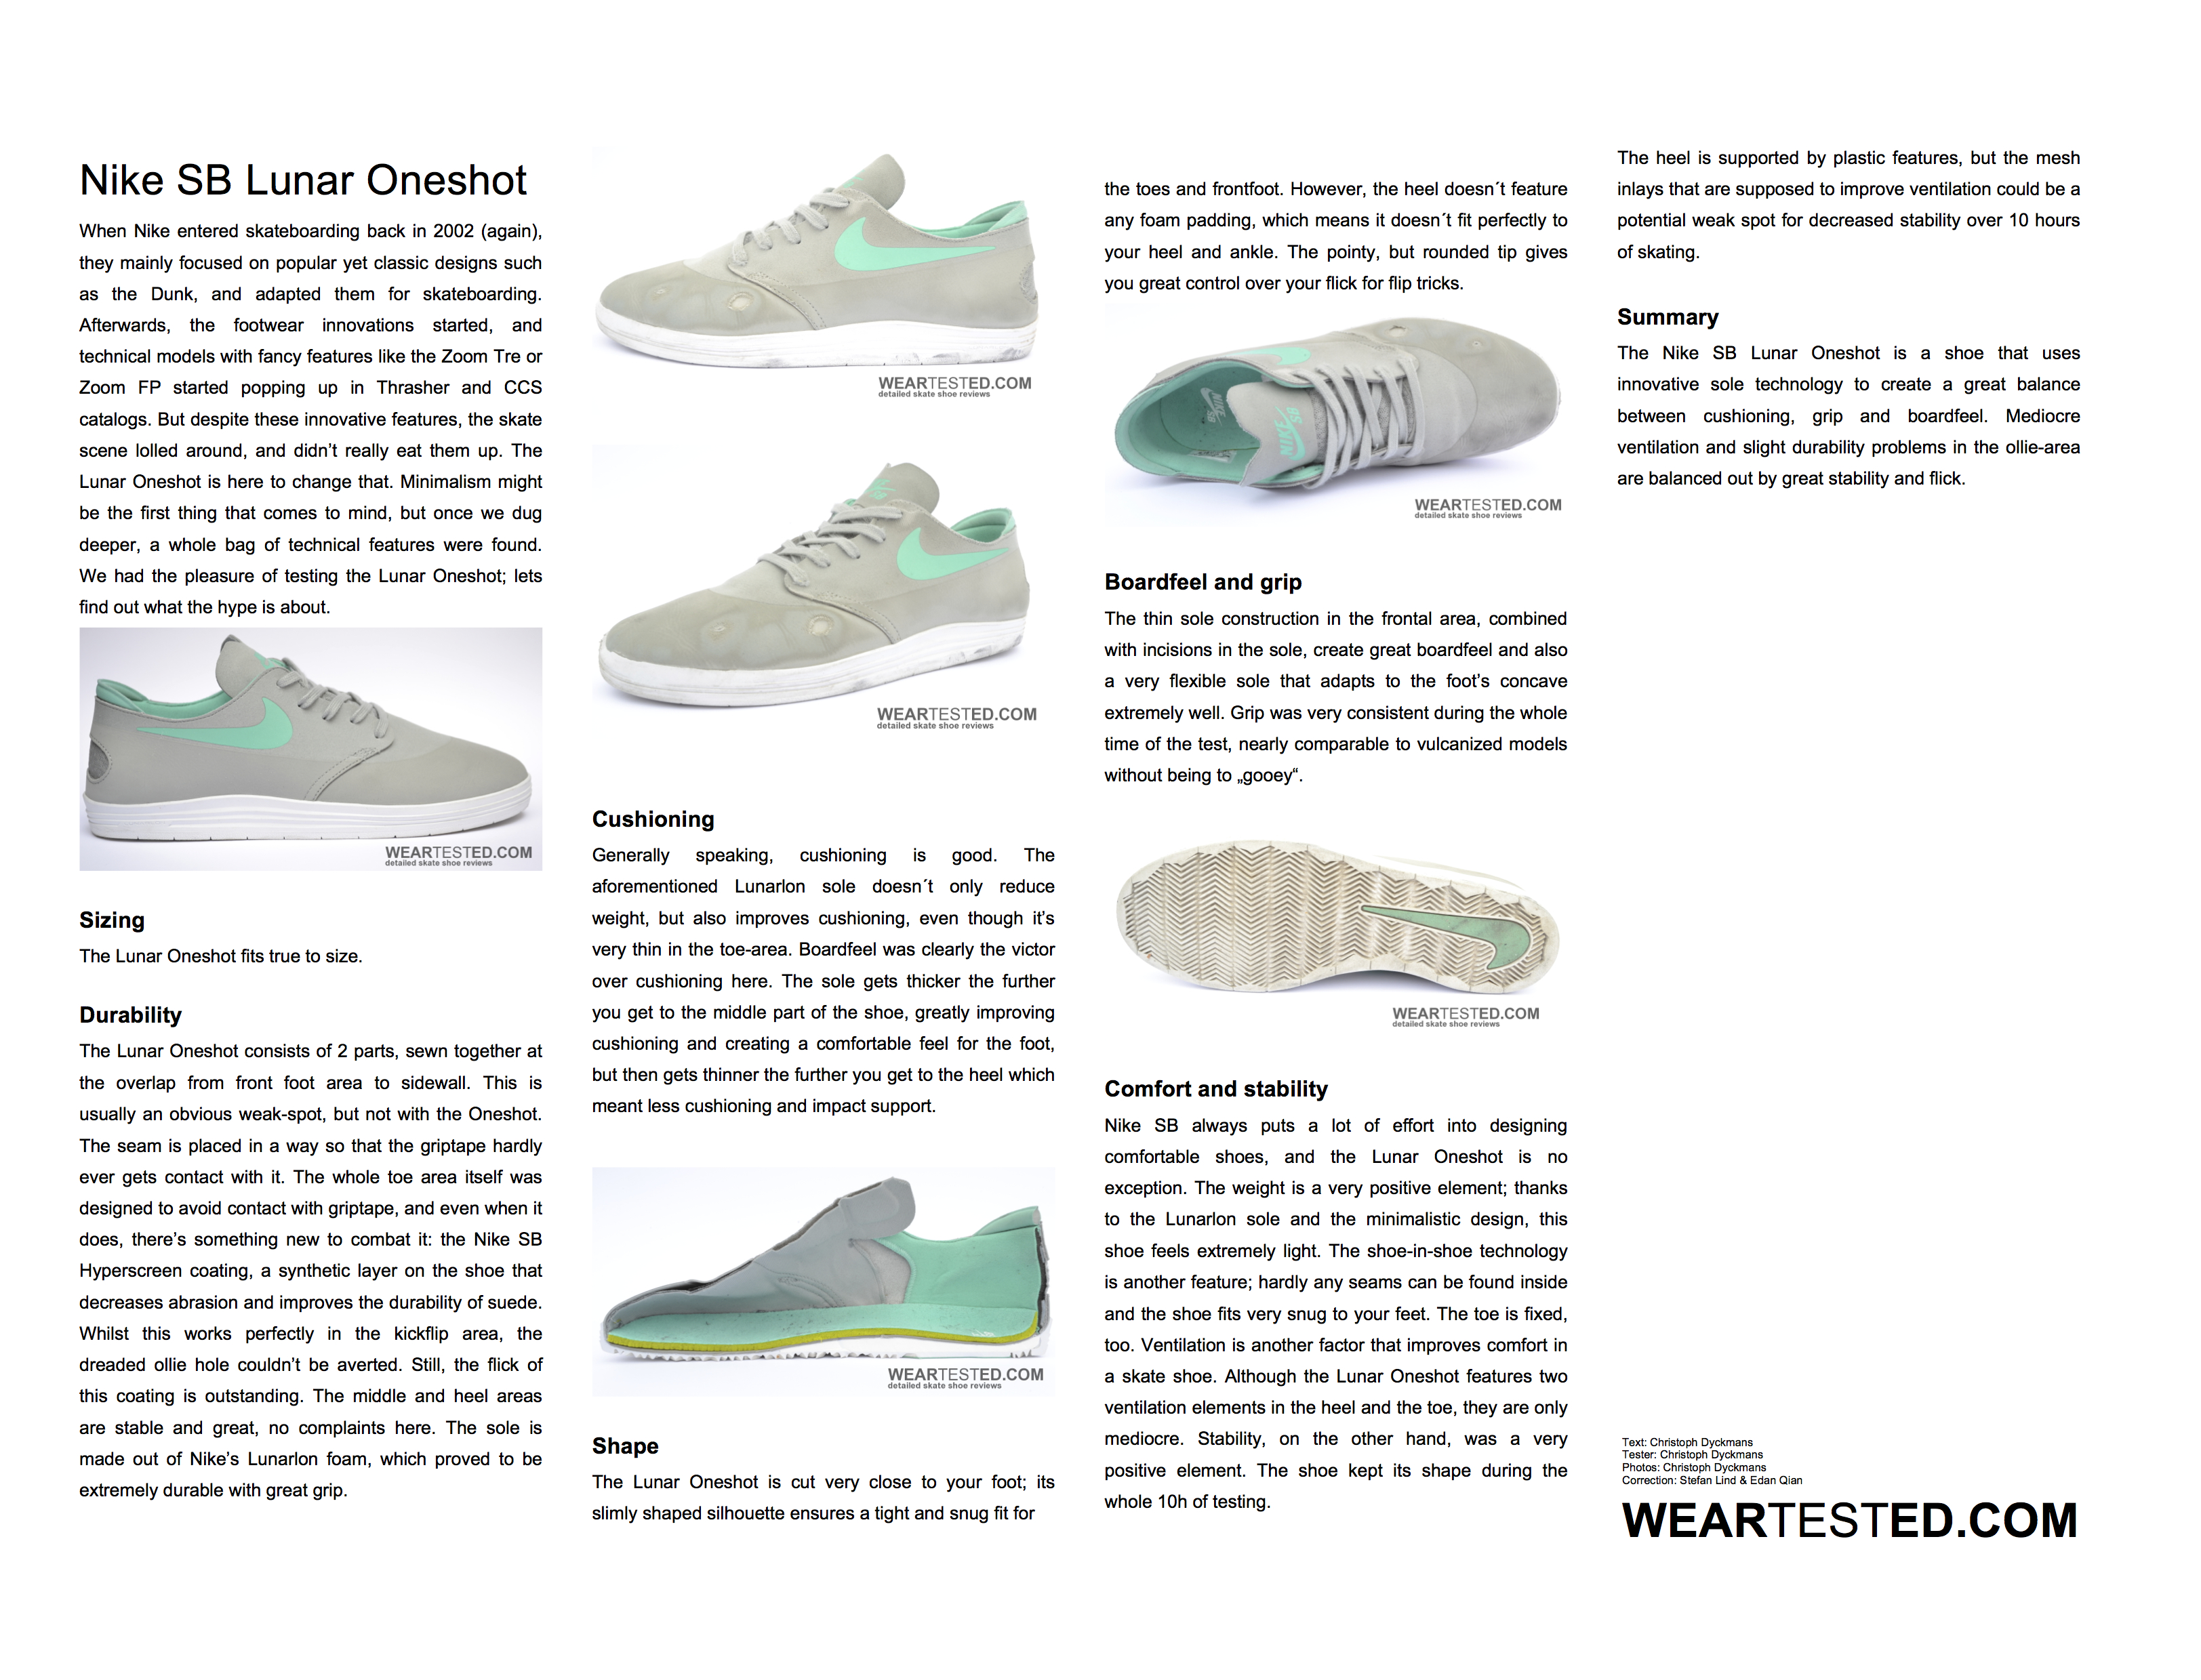 Nike SB Oneshot Weartested - skate shoe reviews